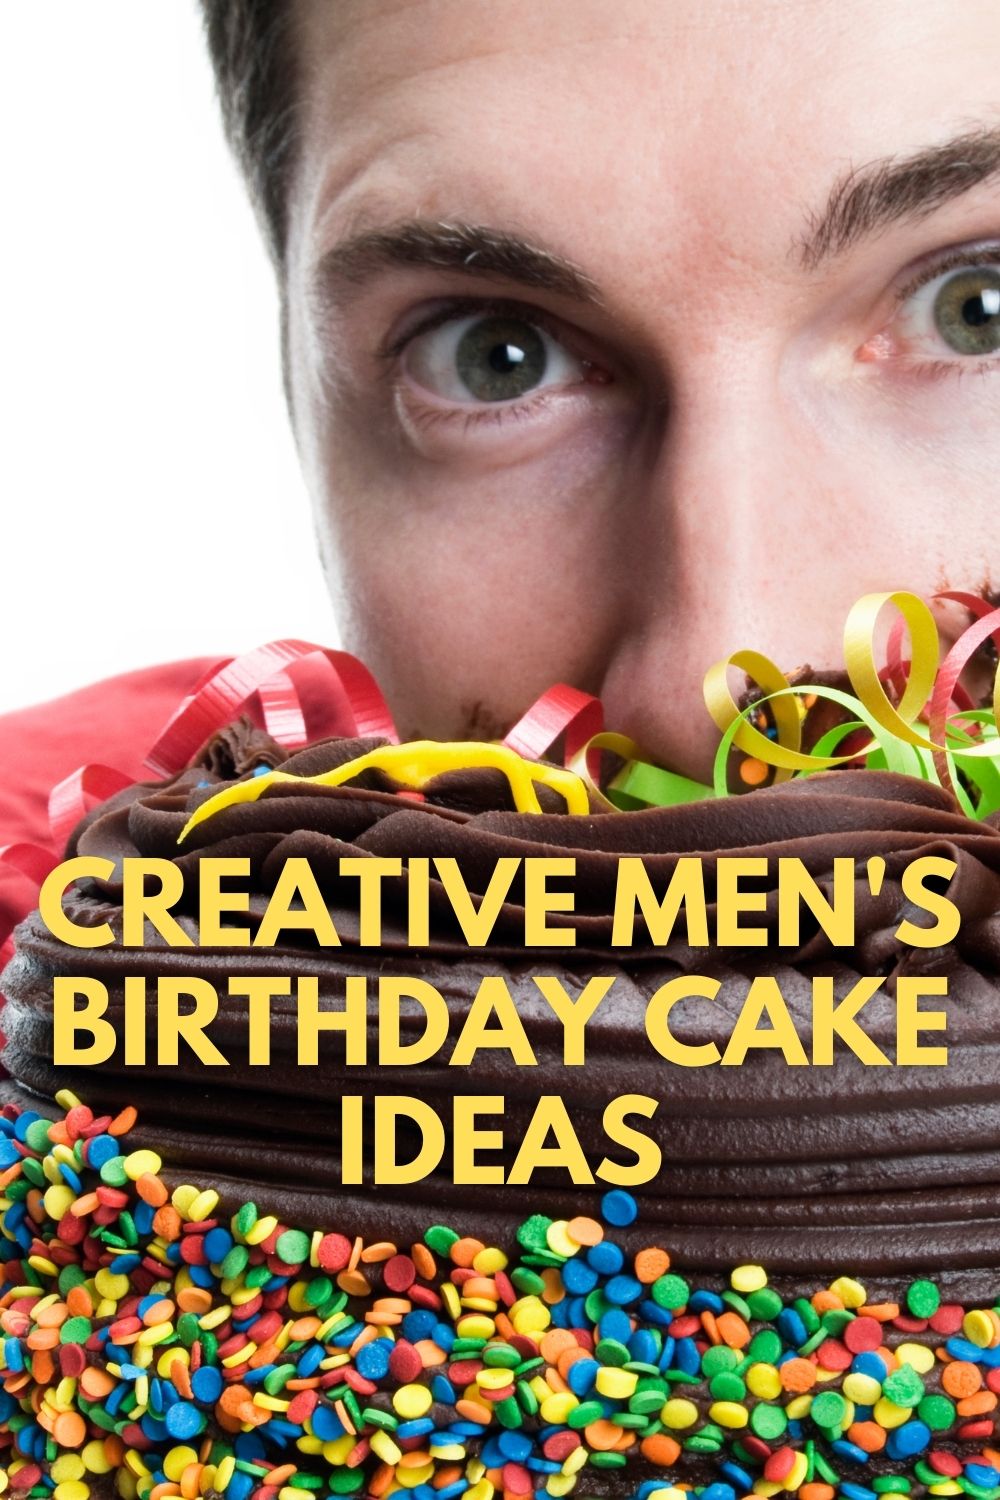 Creative men's birthday cake ideas